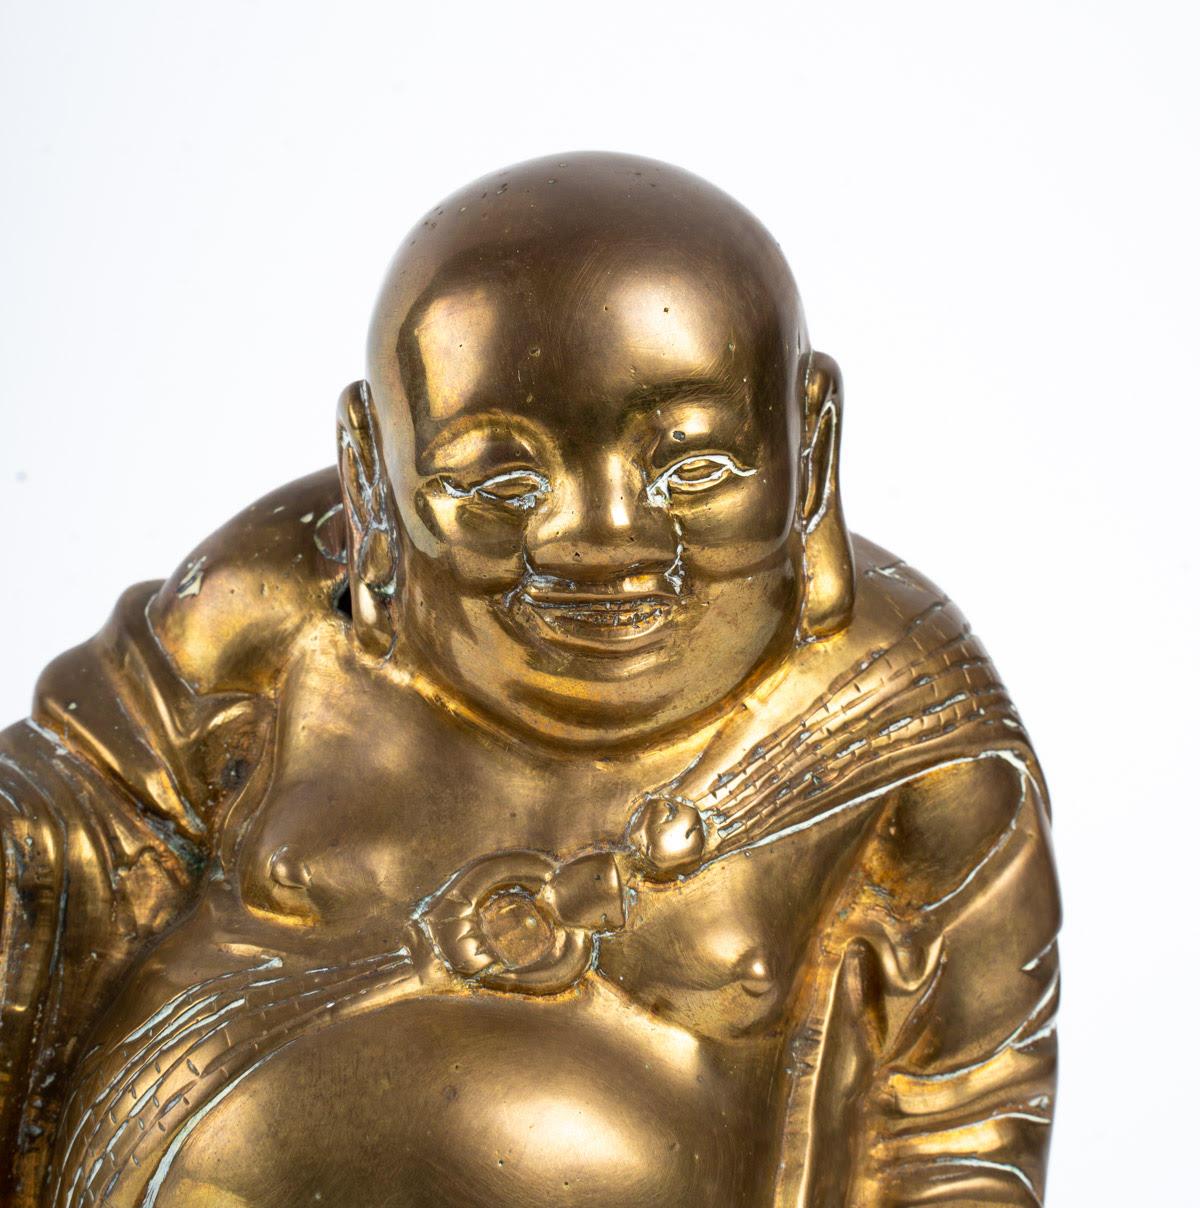 Bronze Buddha, 20th century.
Measures: H 26 cm, W 20 cm, D 10 cm.